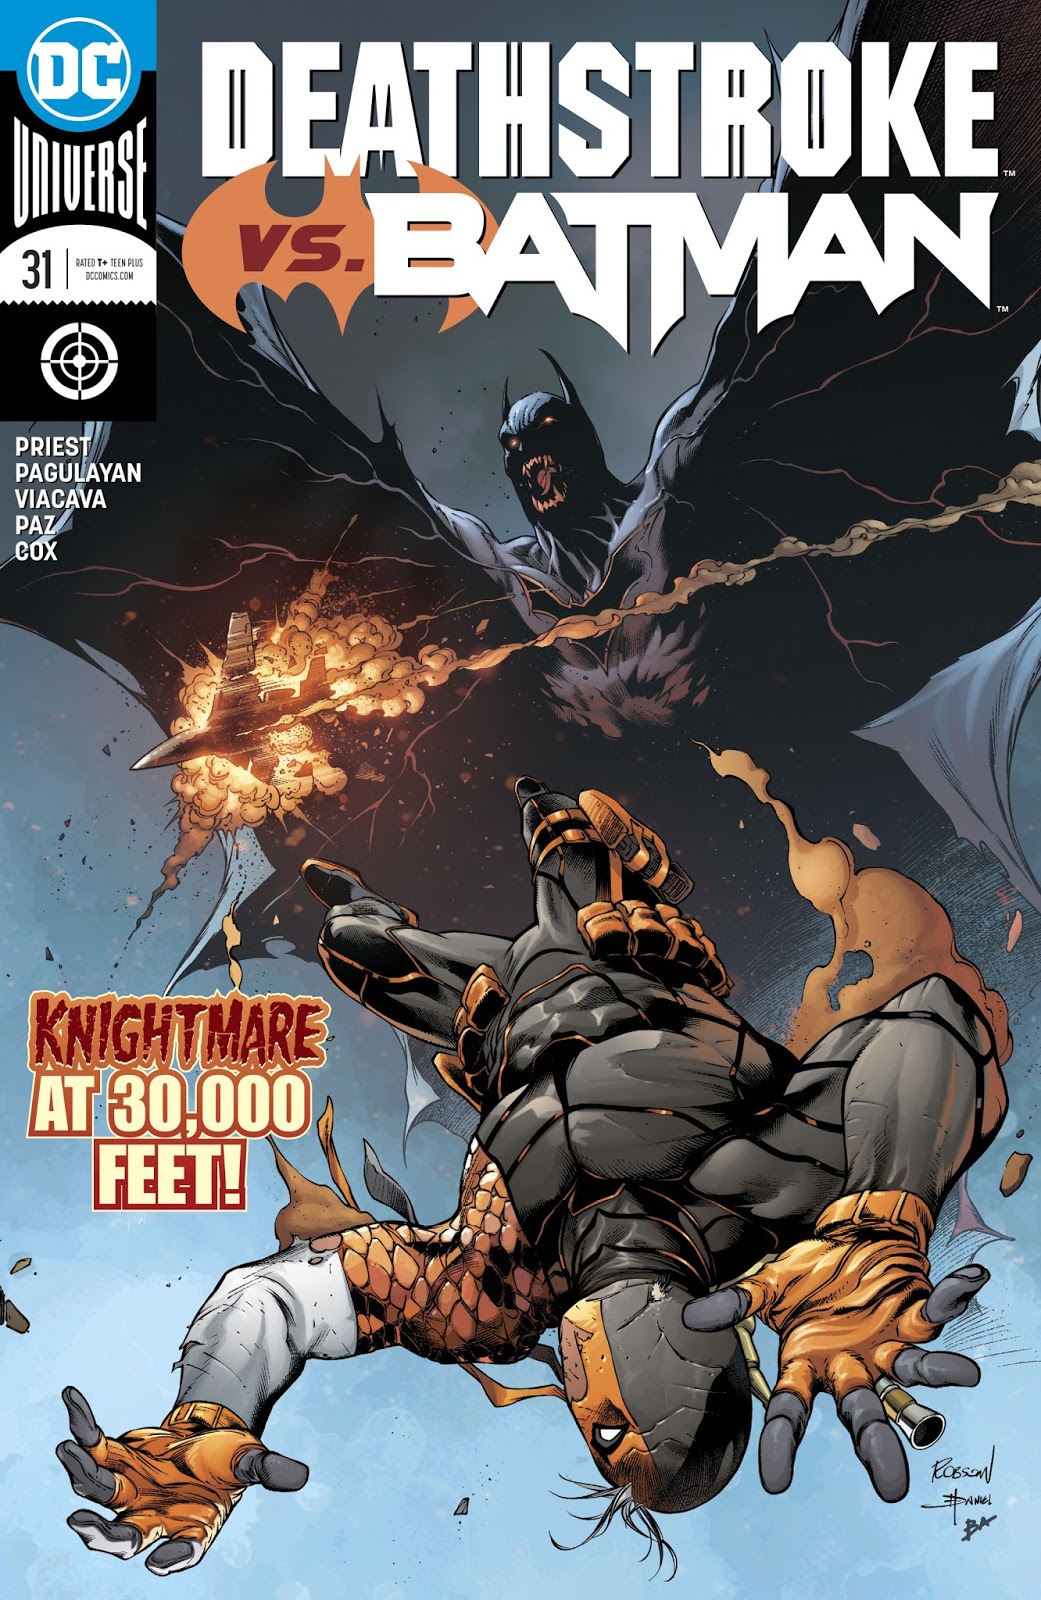 COMIC BOOK FAN AND LOVER: DEATHSTROKE vs BATMAN, PARTE 2 – DC COMICS